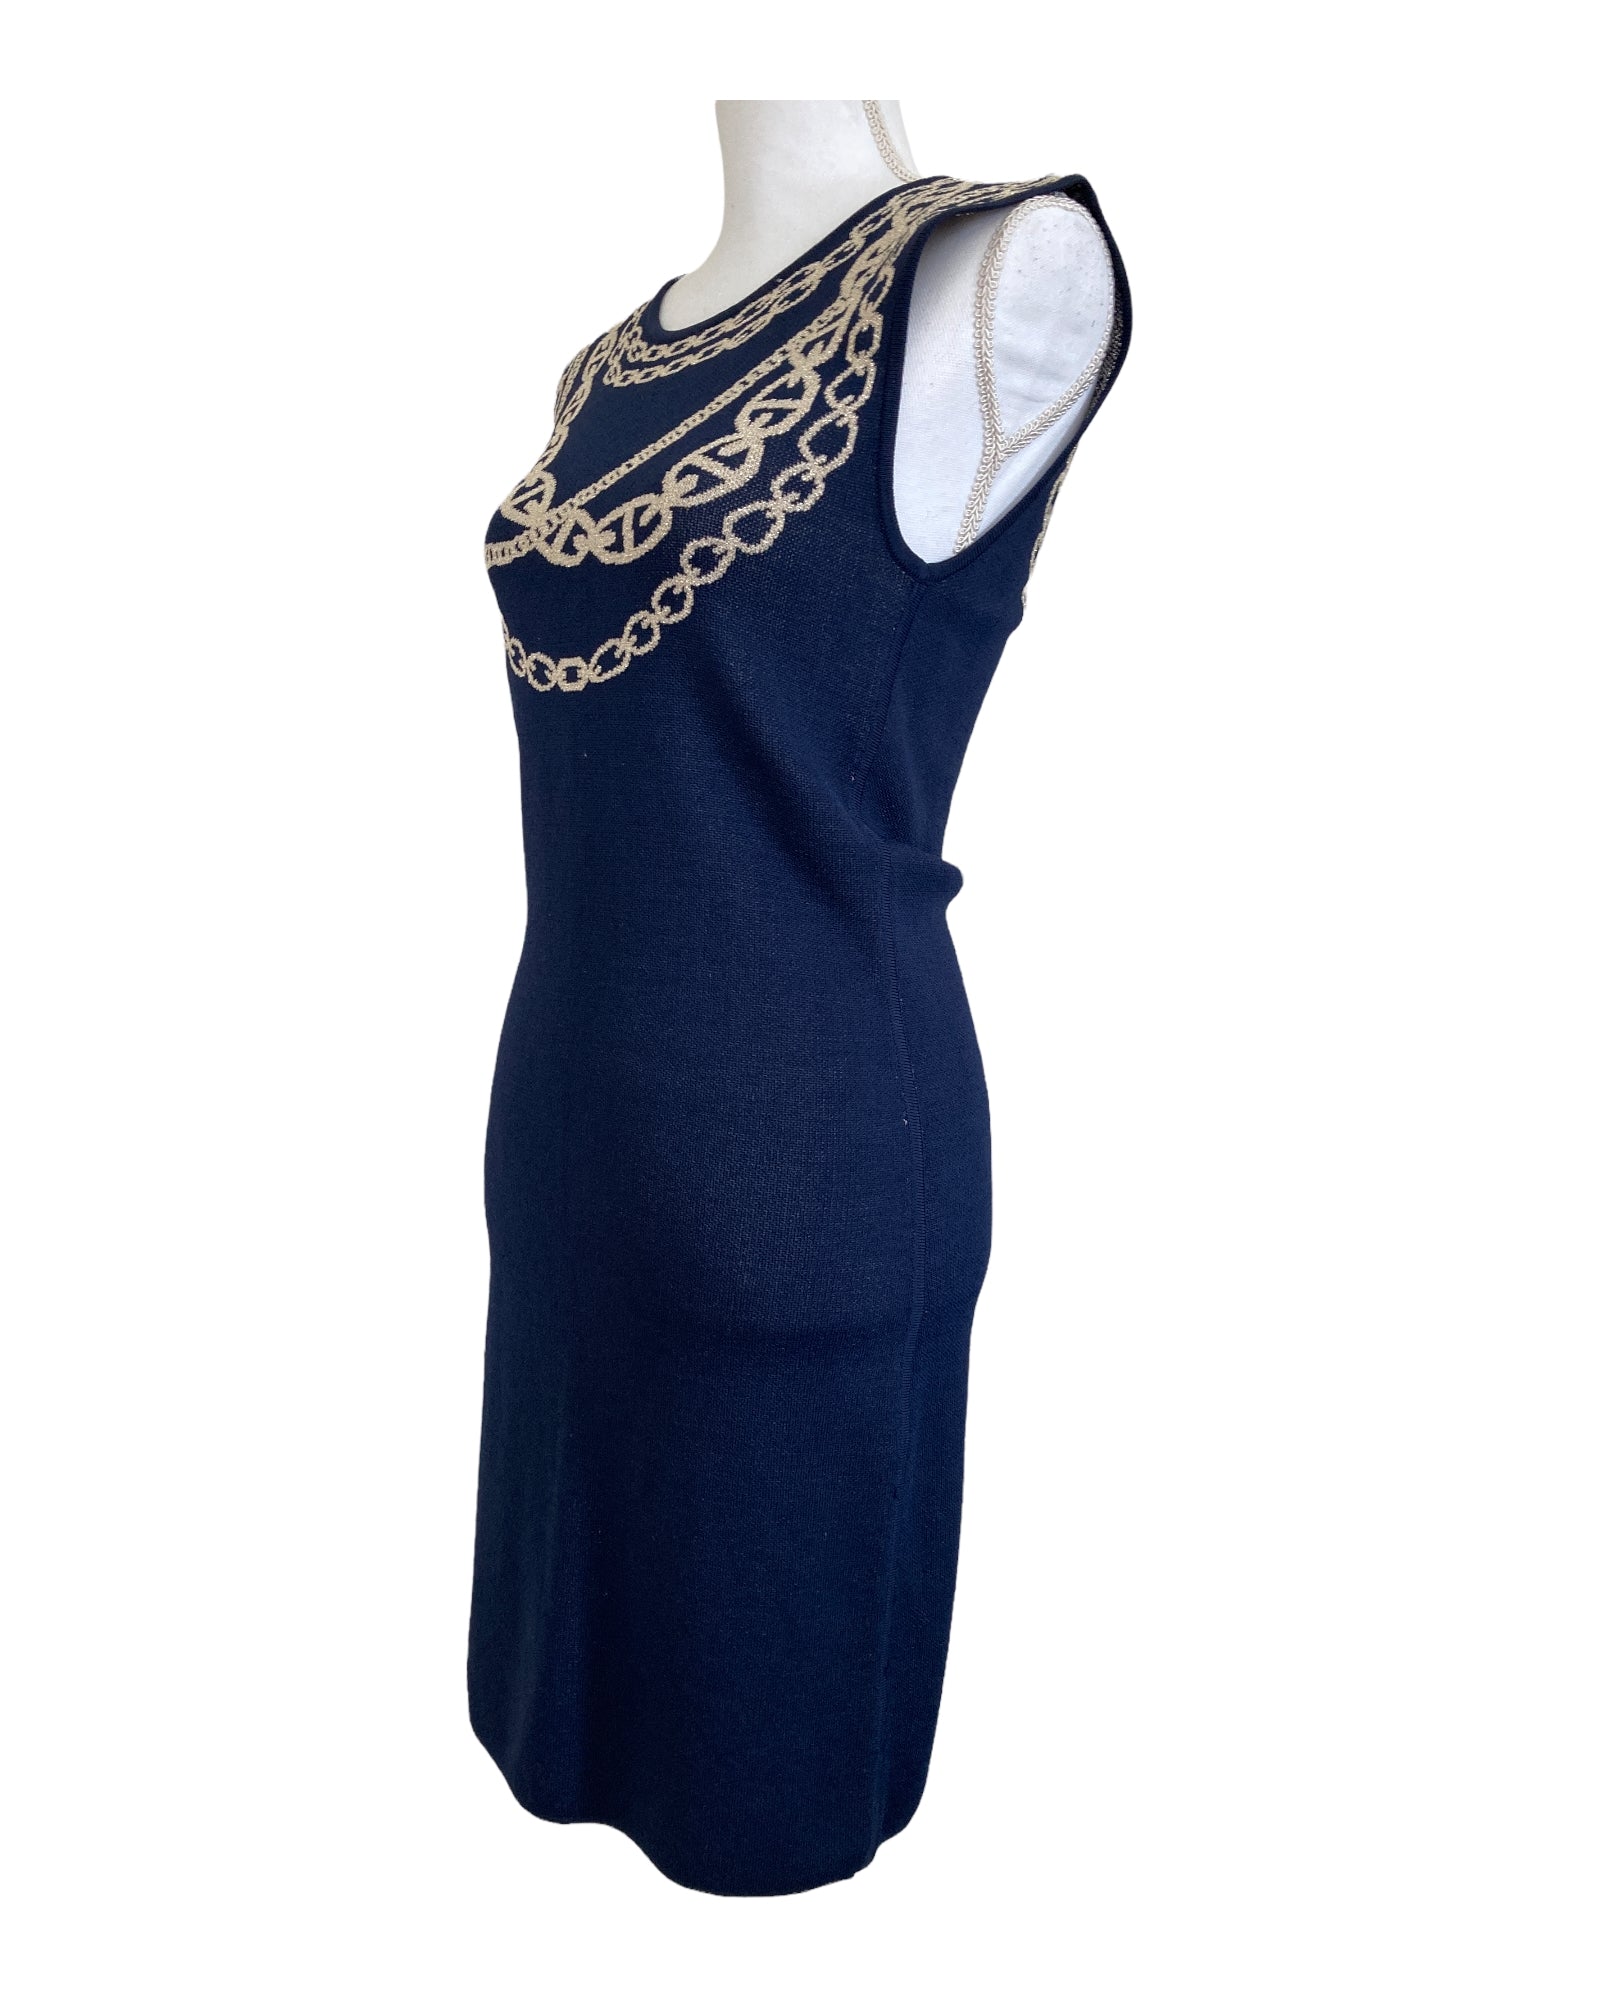 Adrienne Vittadini Navy Knit Dress, S